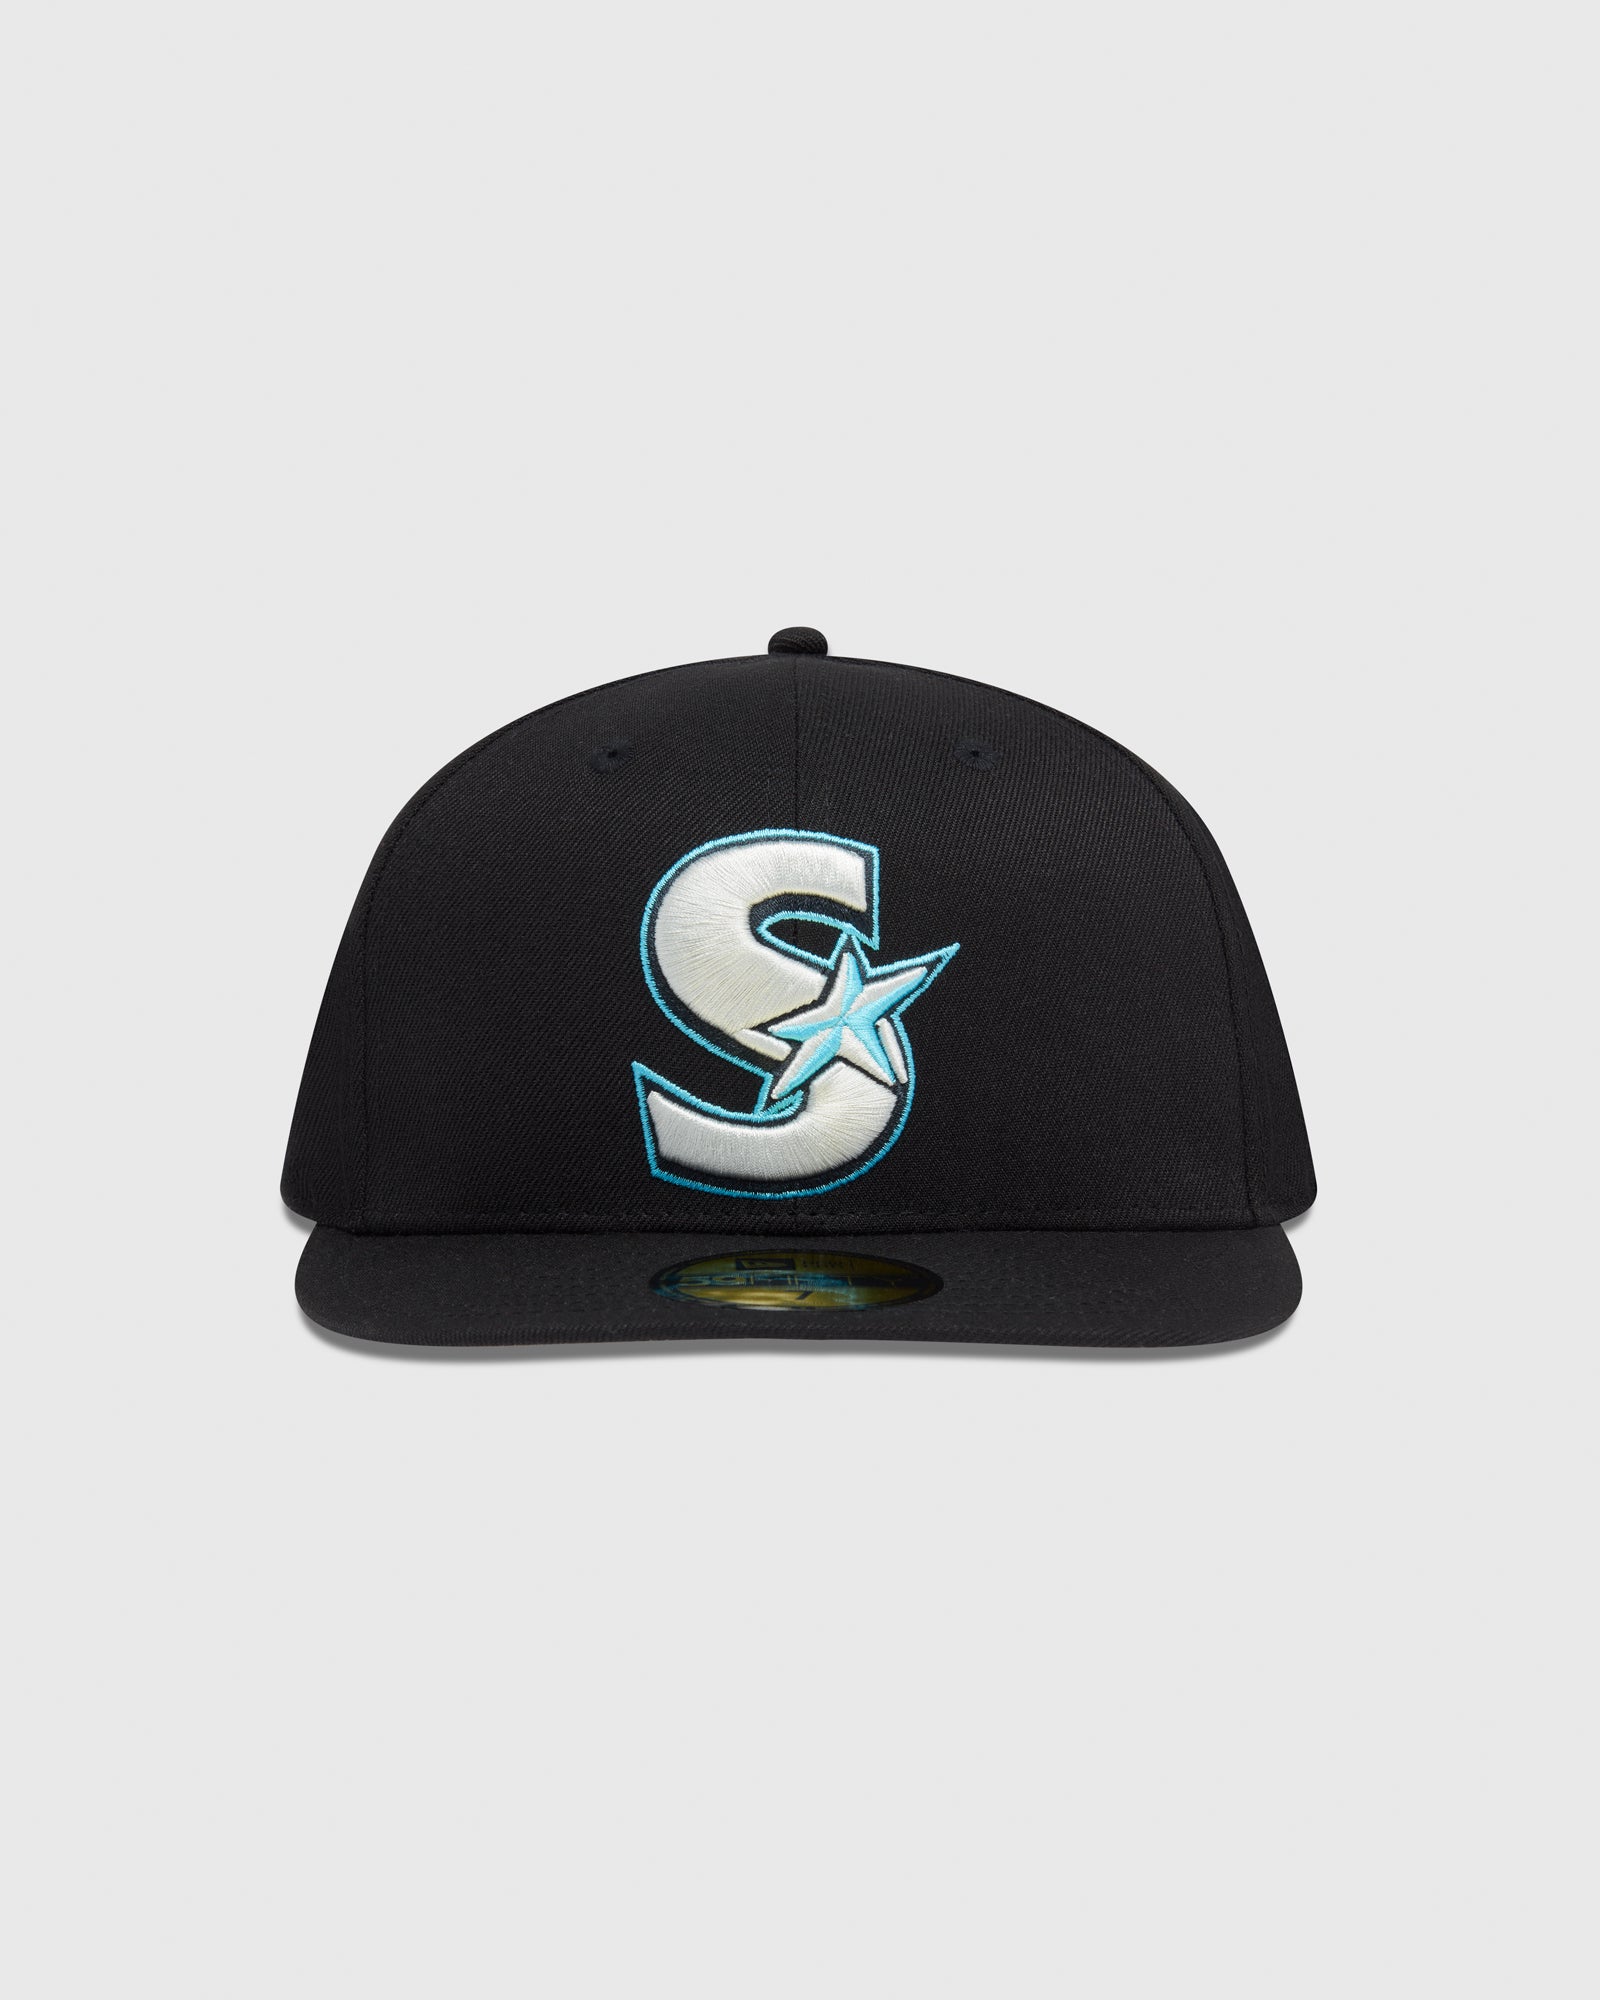 SSS New Era 59Fifty Cap - Black IMAGE #1